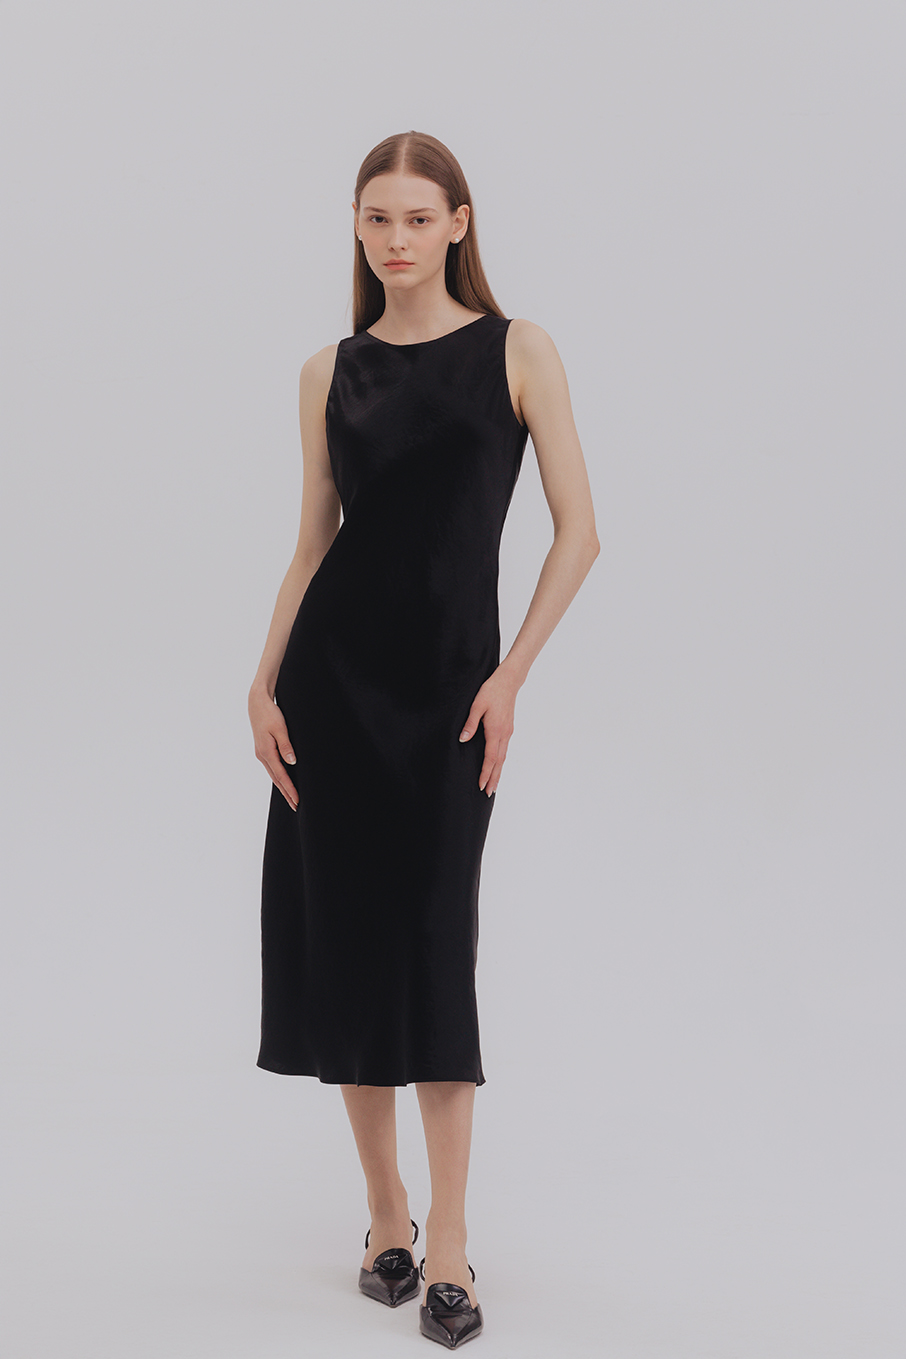 Galobi dress (Black)